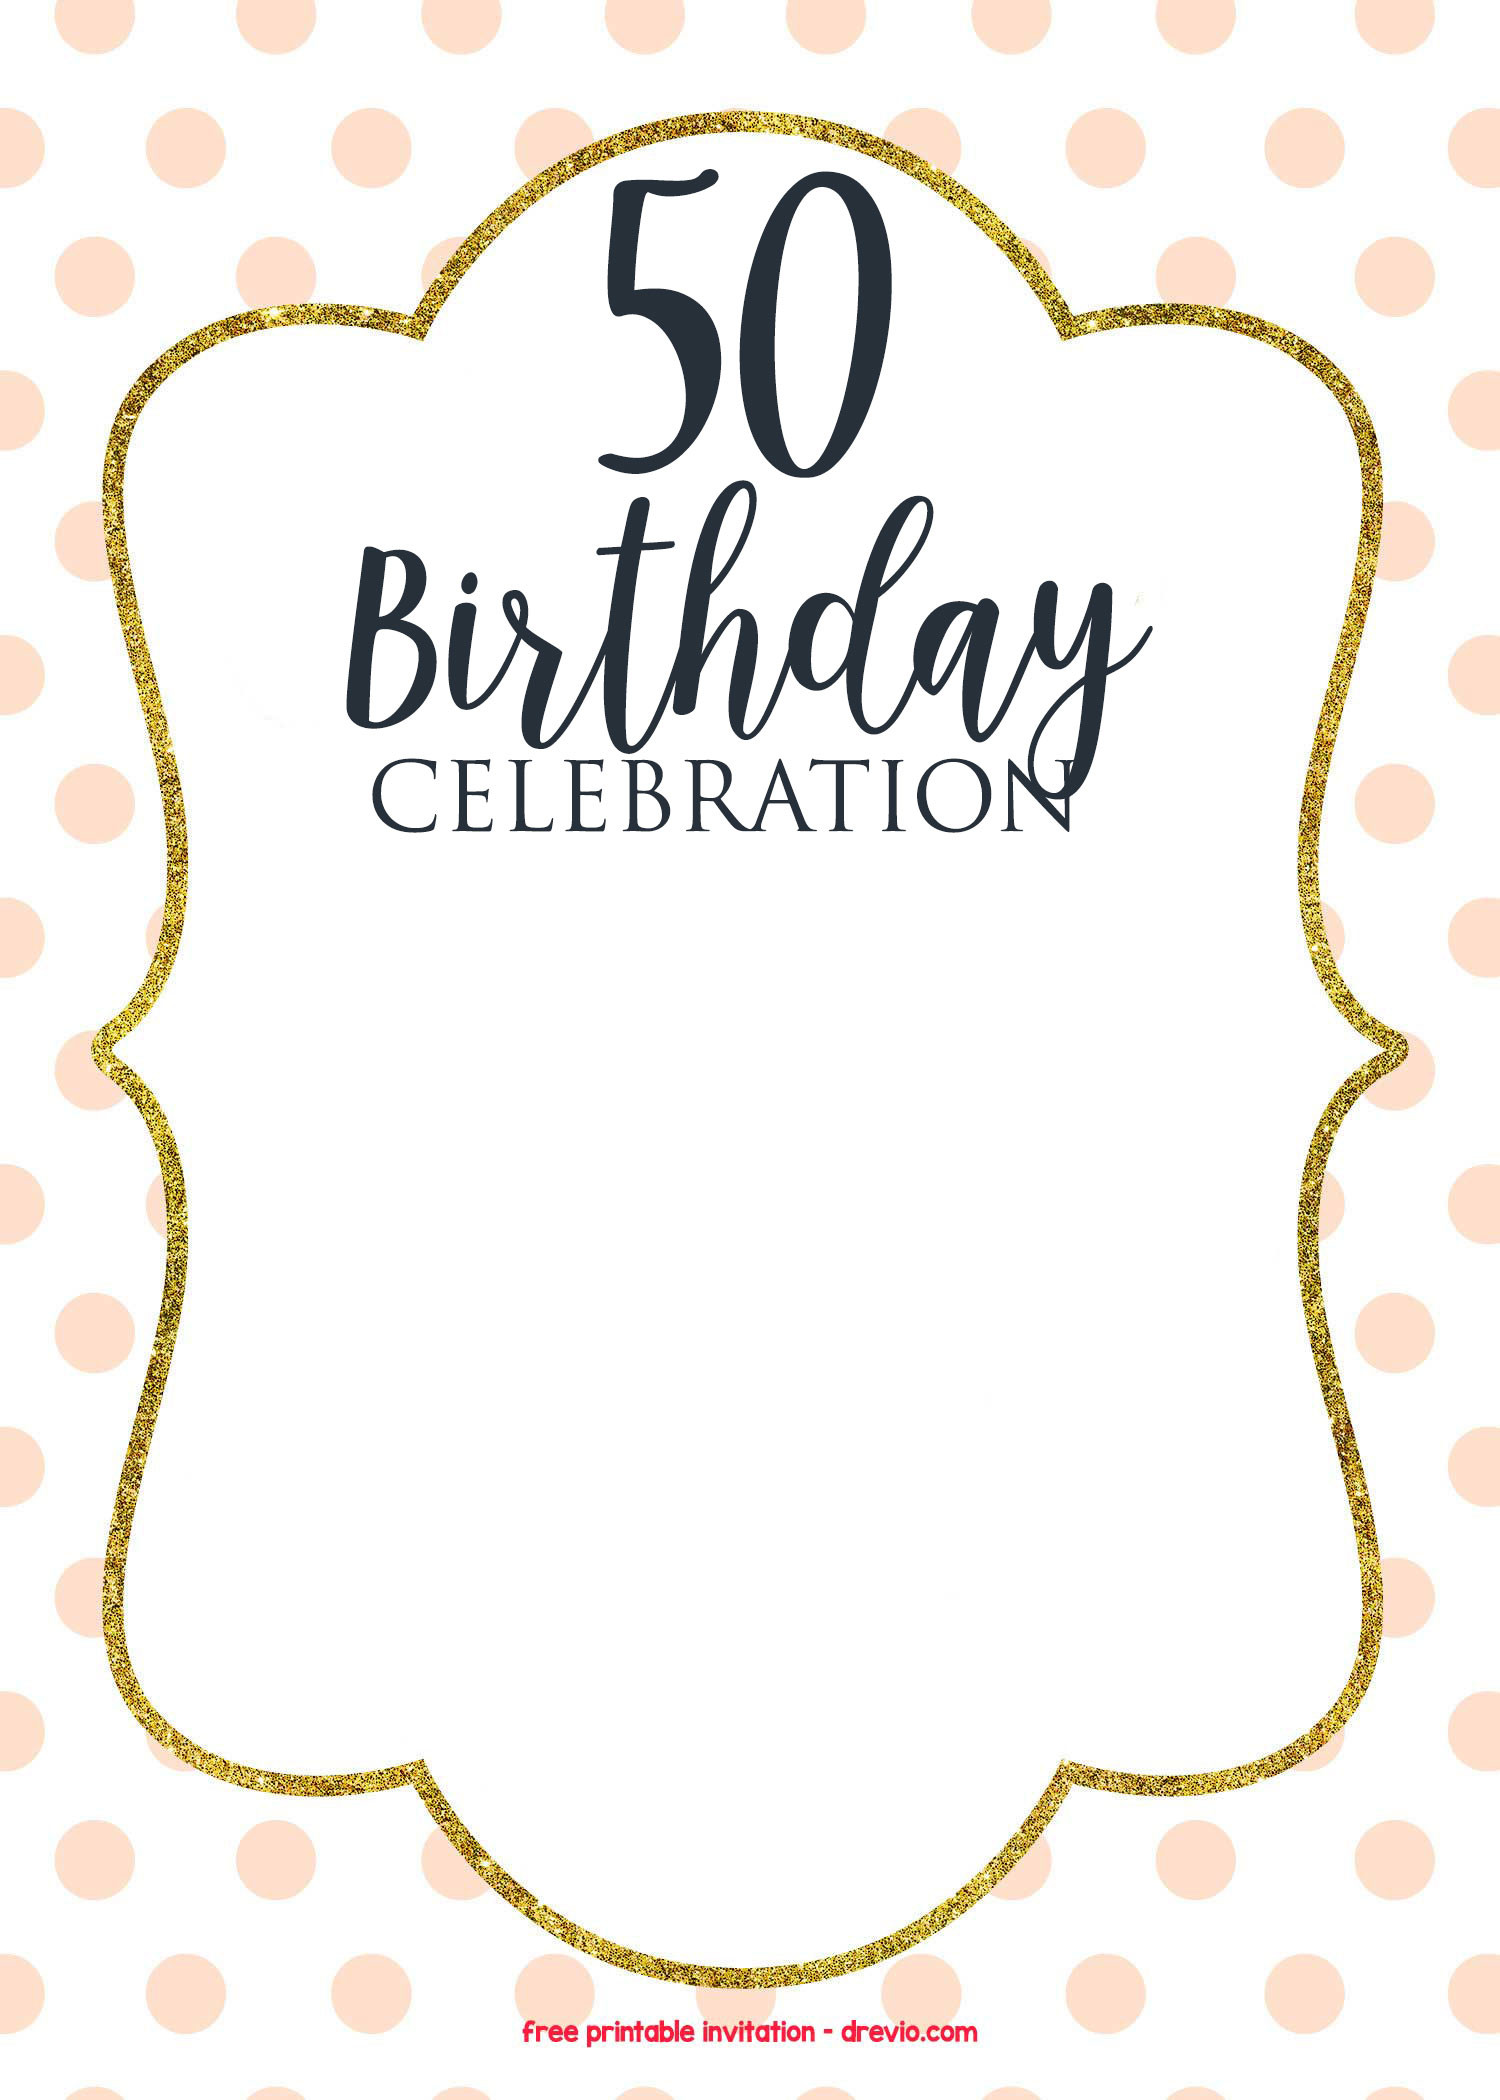 50th Birthday Party Invitation Template
 50th Birthday Invitations line – FREE PRINTABLE Birthday